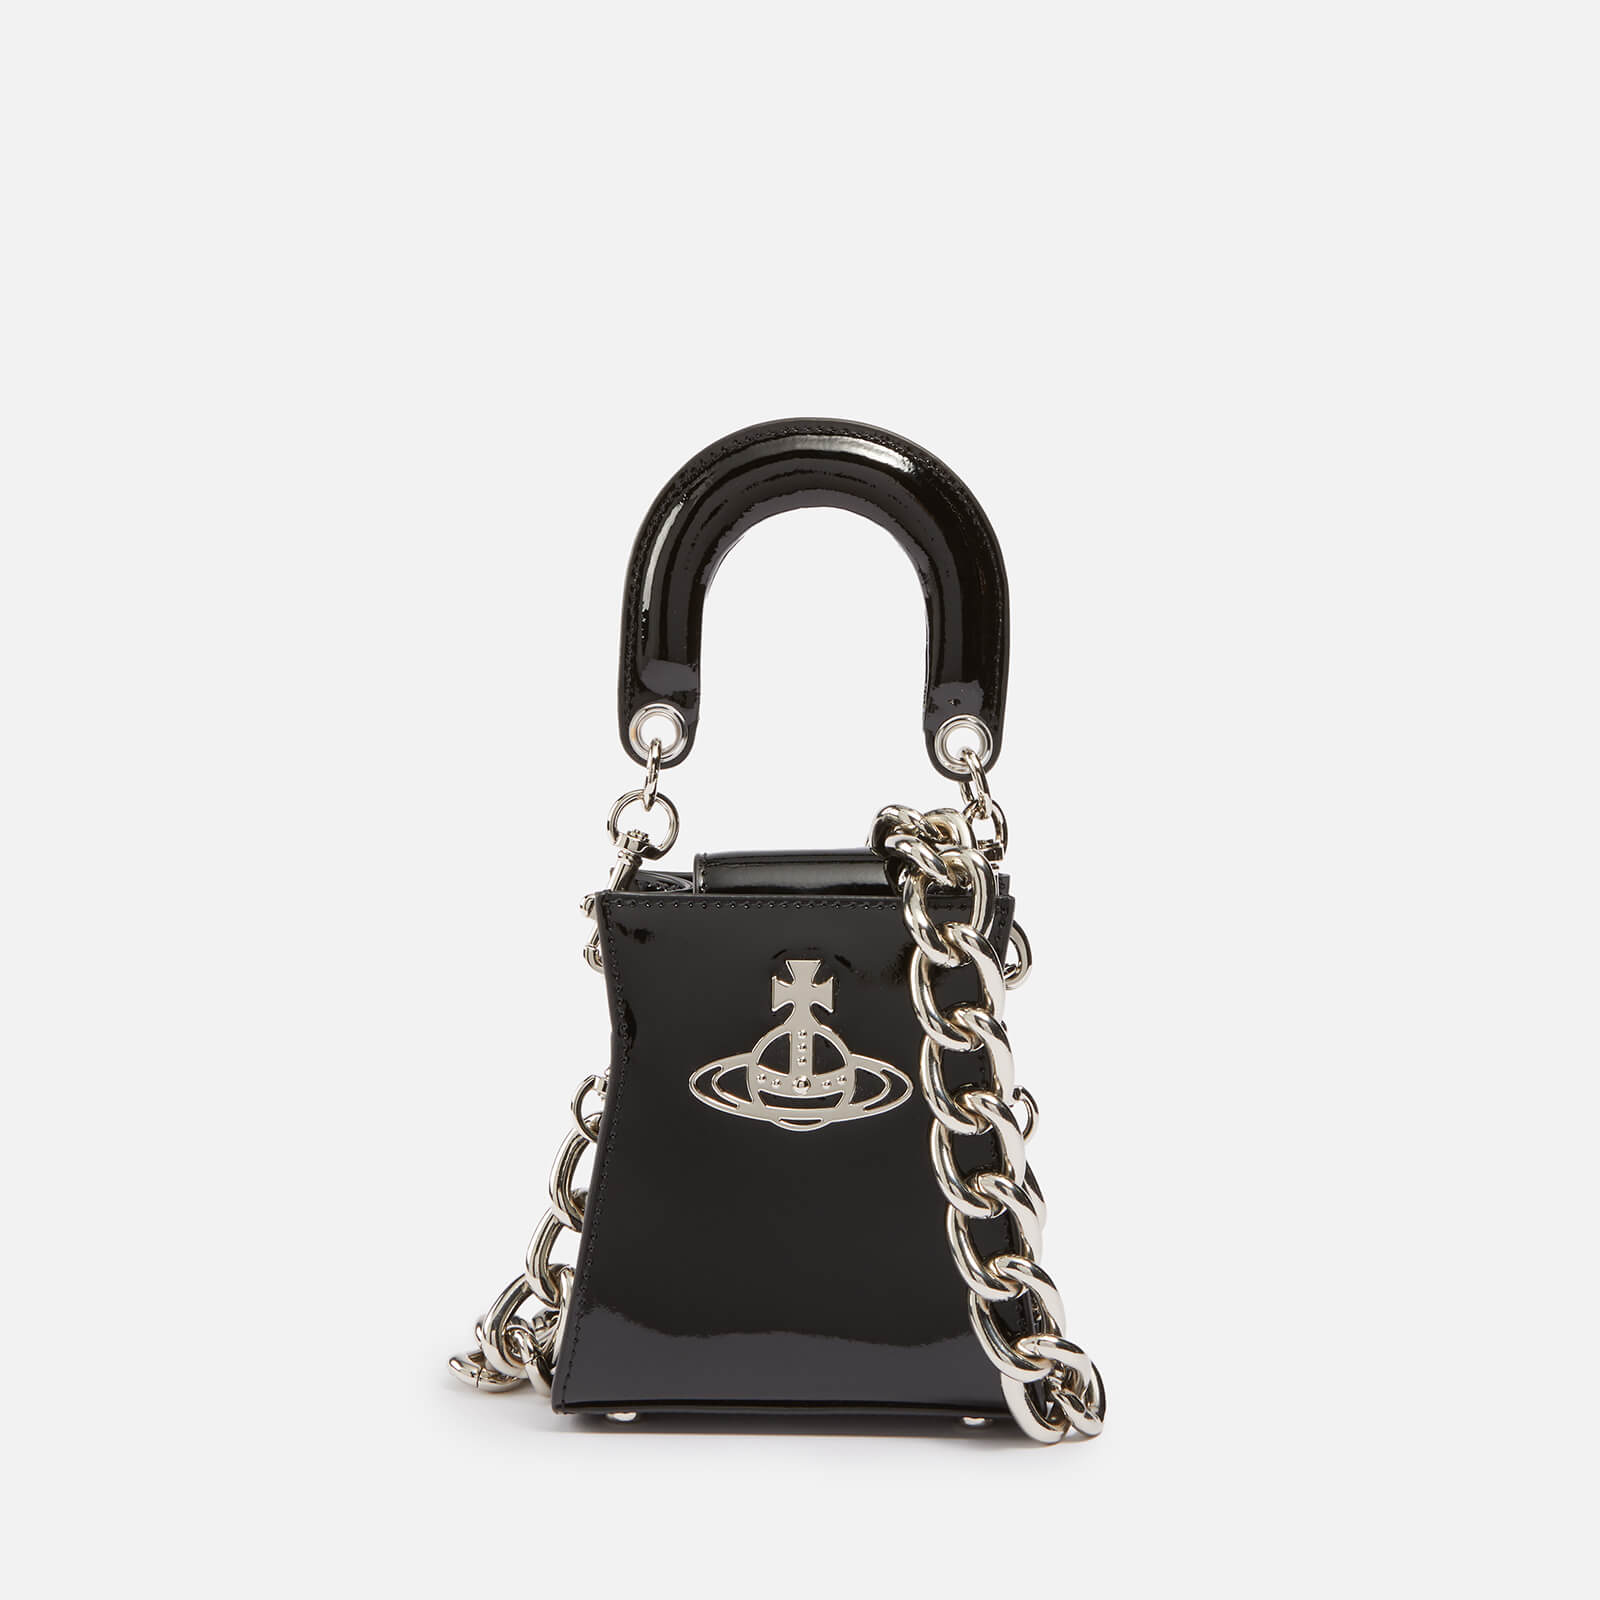 Vivienne Westwood Women's Kelly Small Handbag - Black